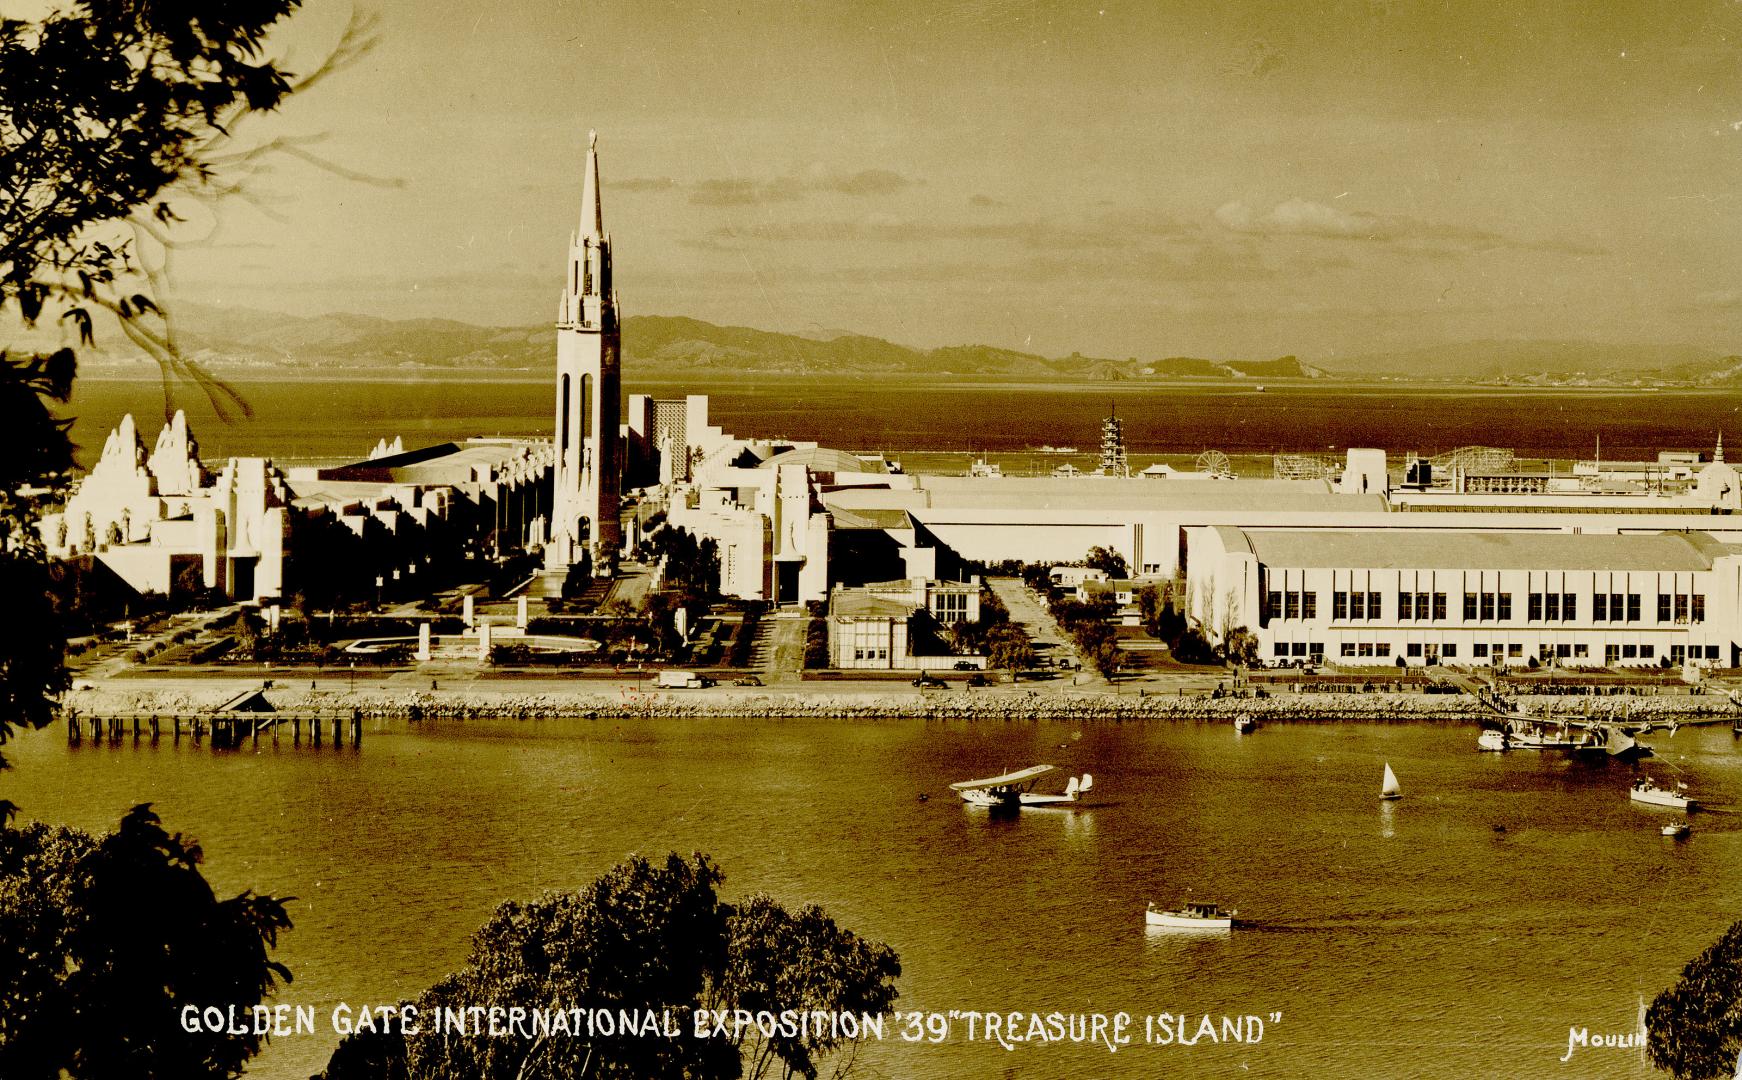 Golden Gate International Exposition '39 ''Treasure Island''